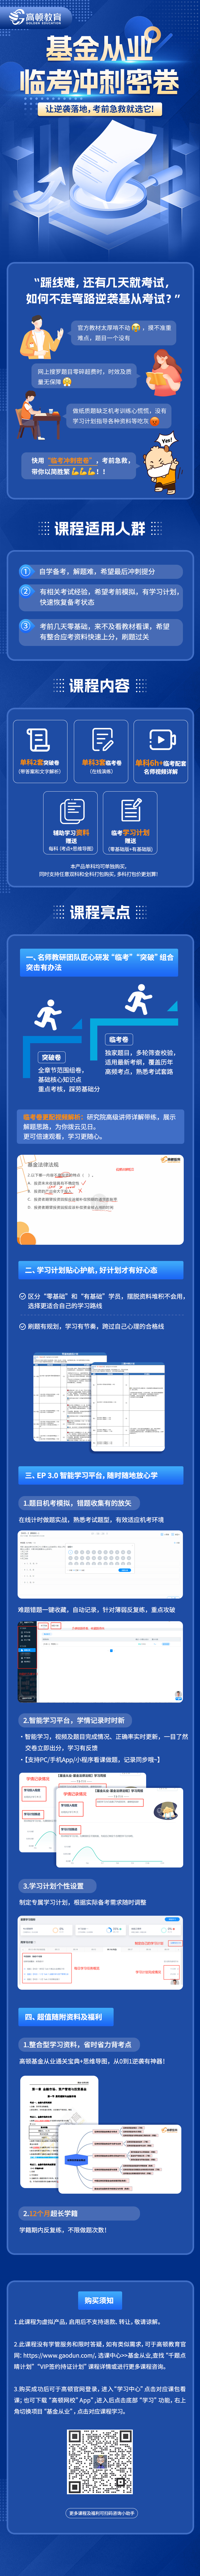 https://simg01.gaodunwangxiao.com/uploadfiles/product-center/202310/30/47126_20231030172058.jpg